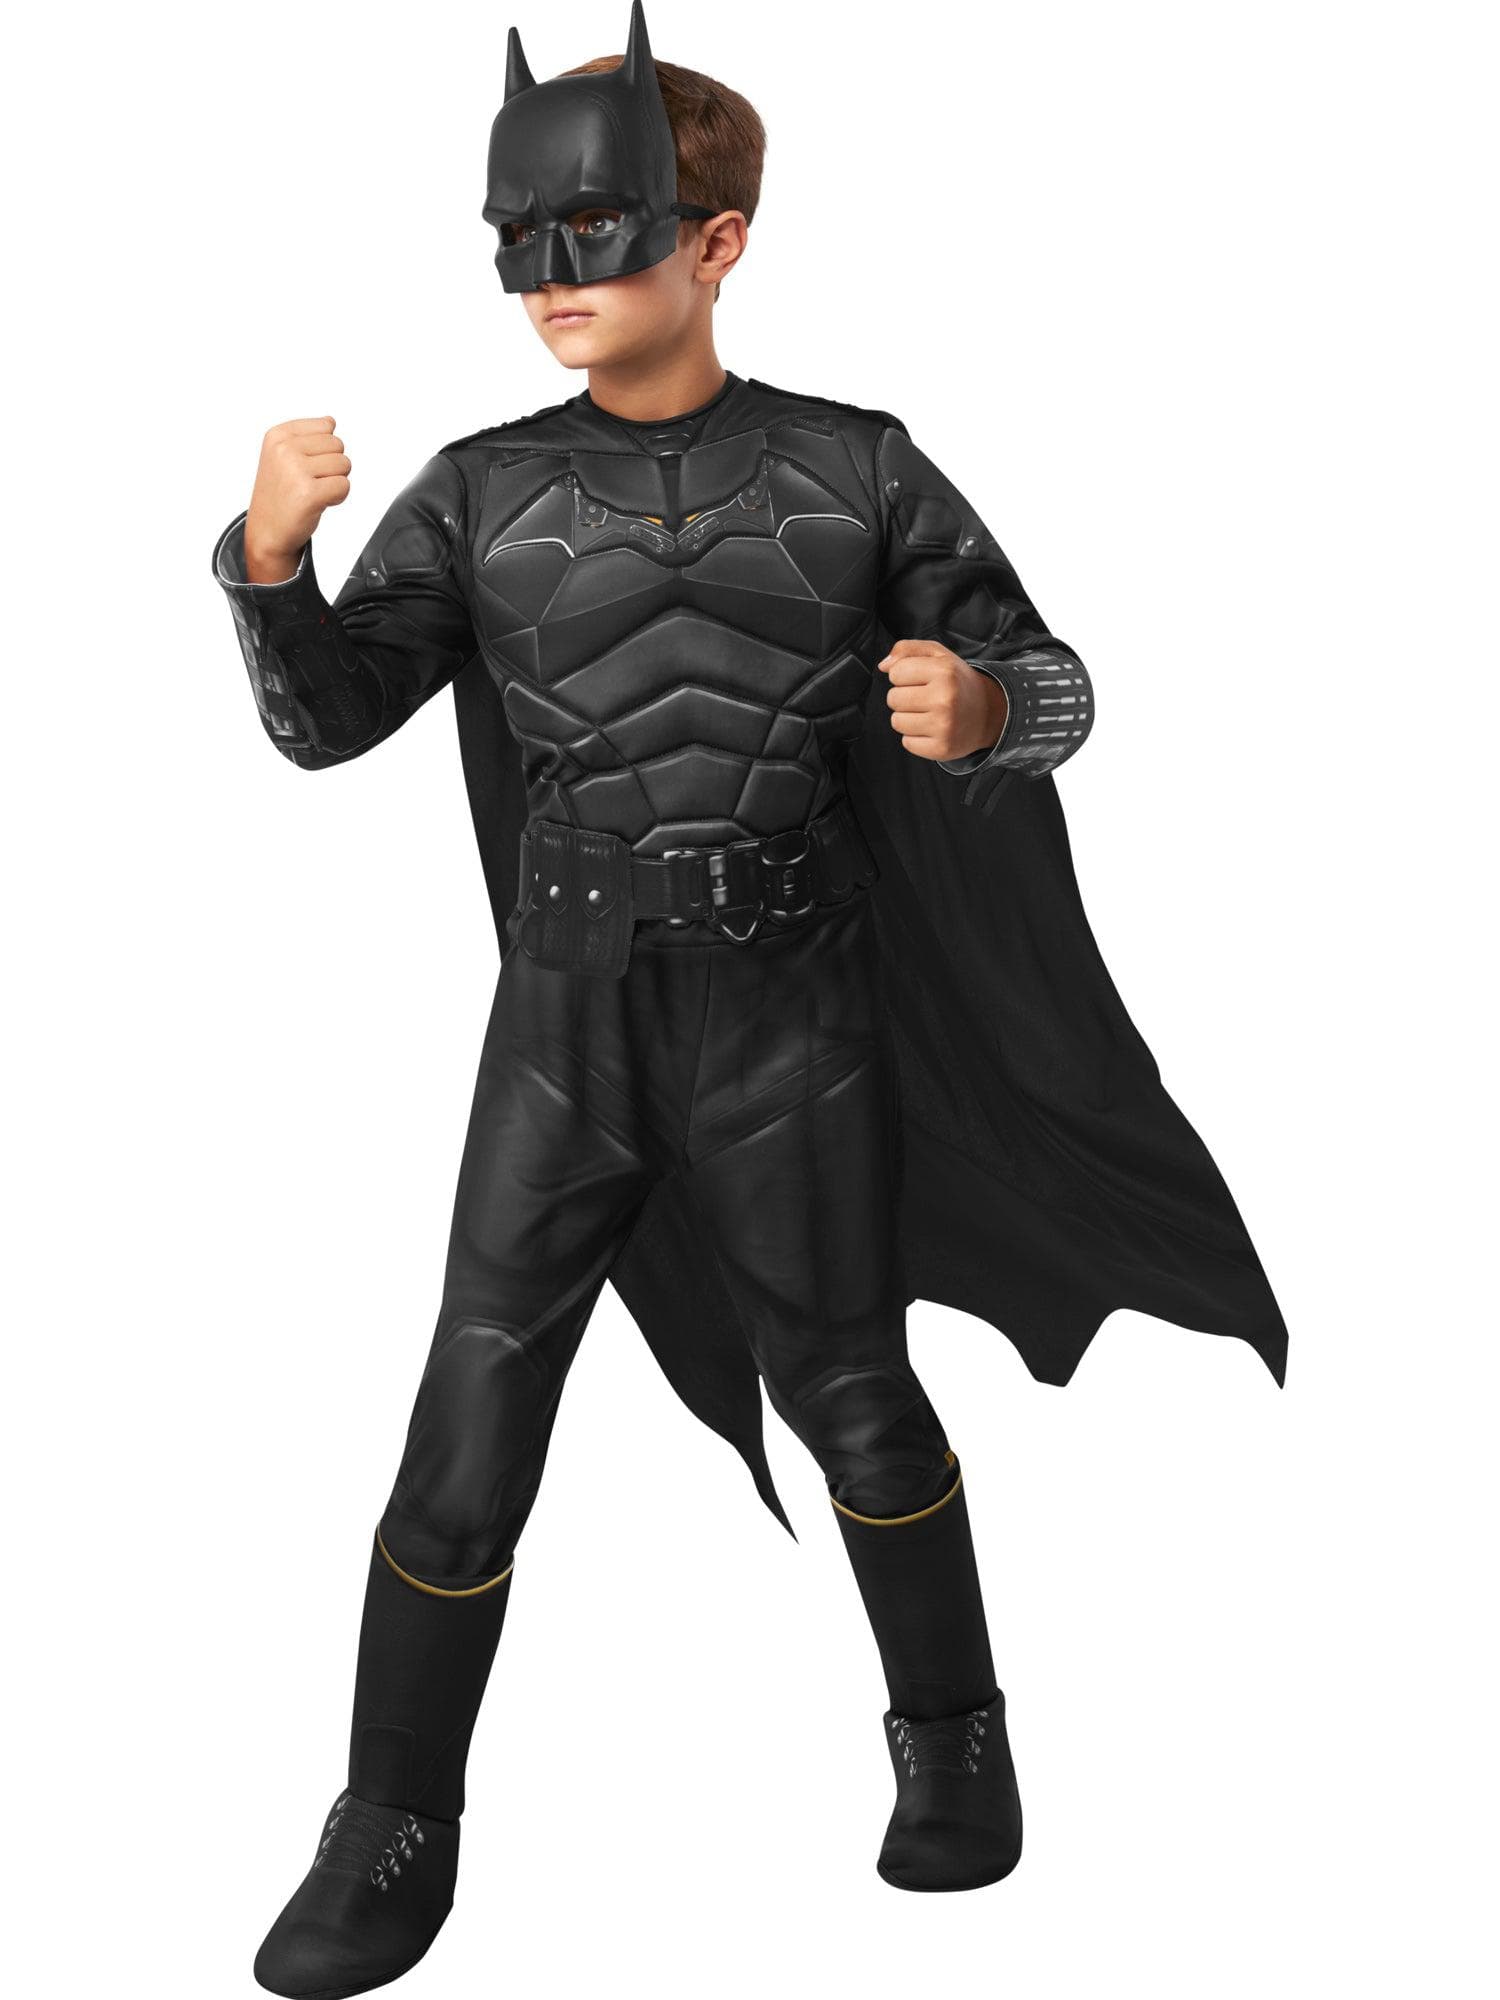 The Batman Deluxe Kids Costume - costumes.com